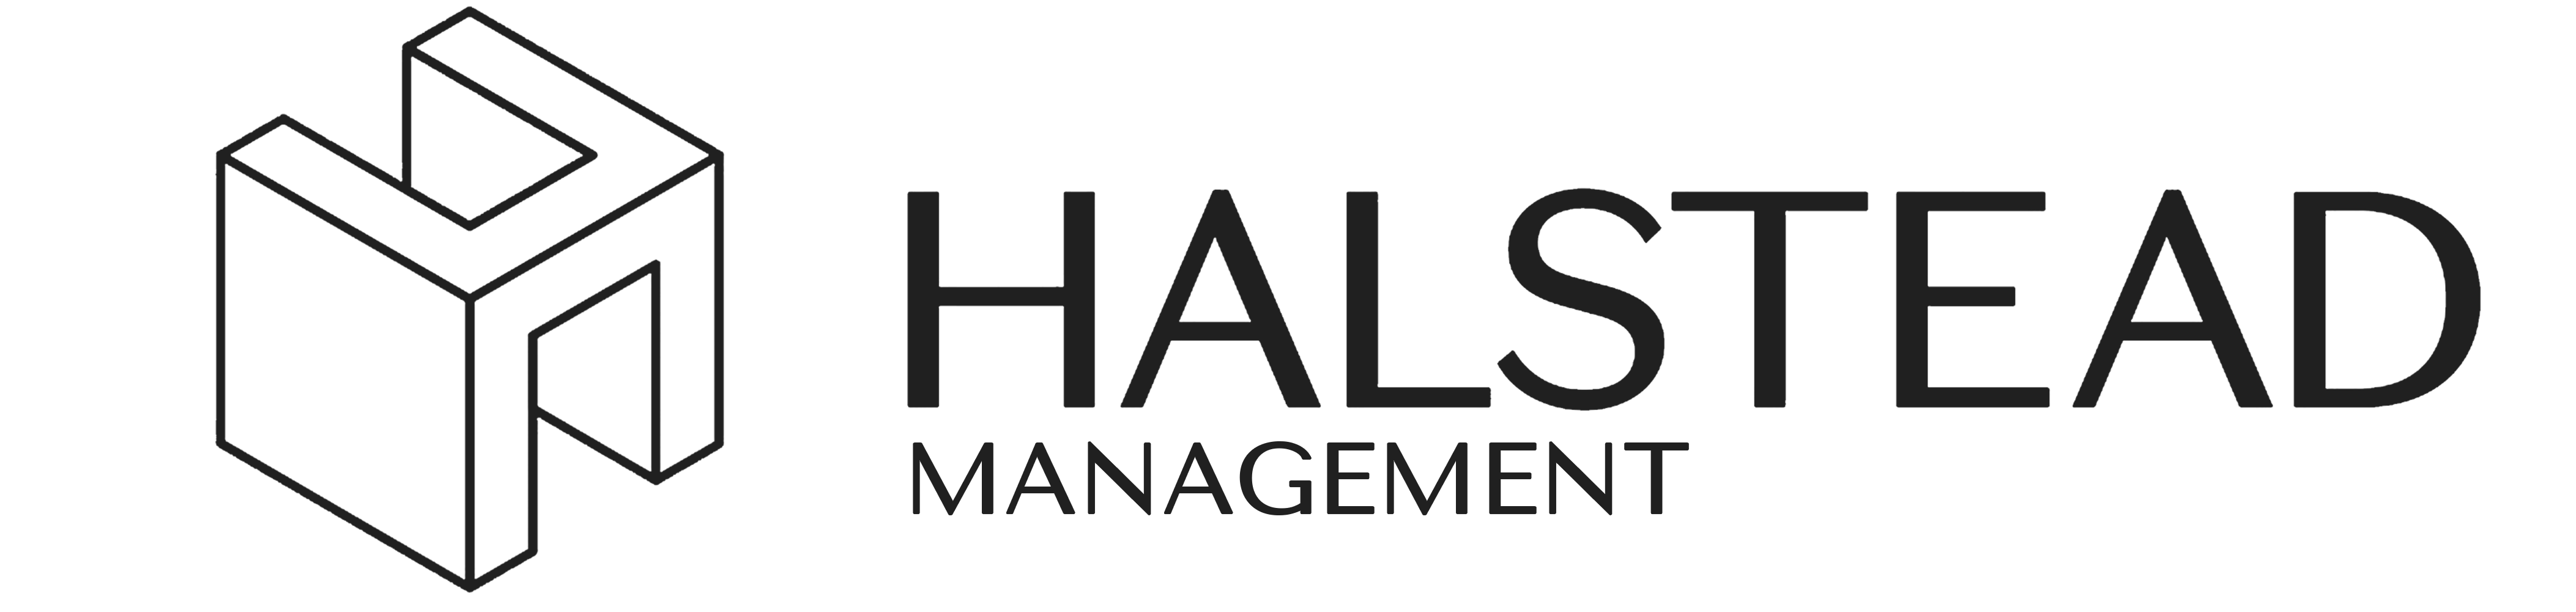 Halstead Management